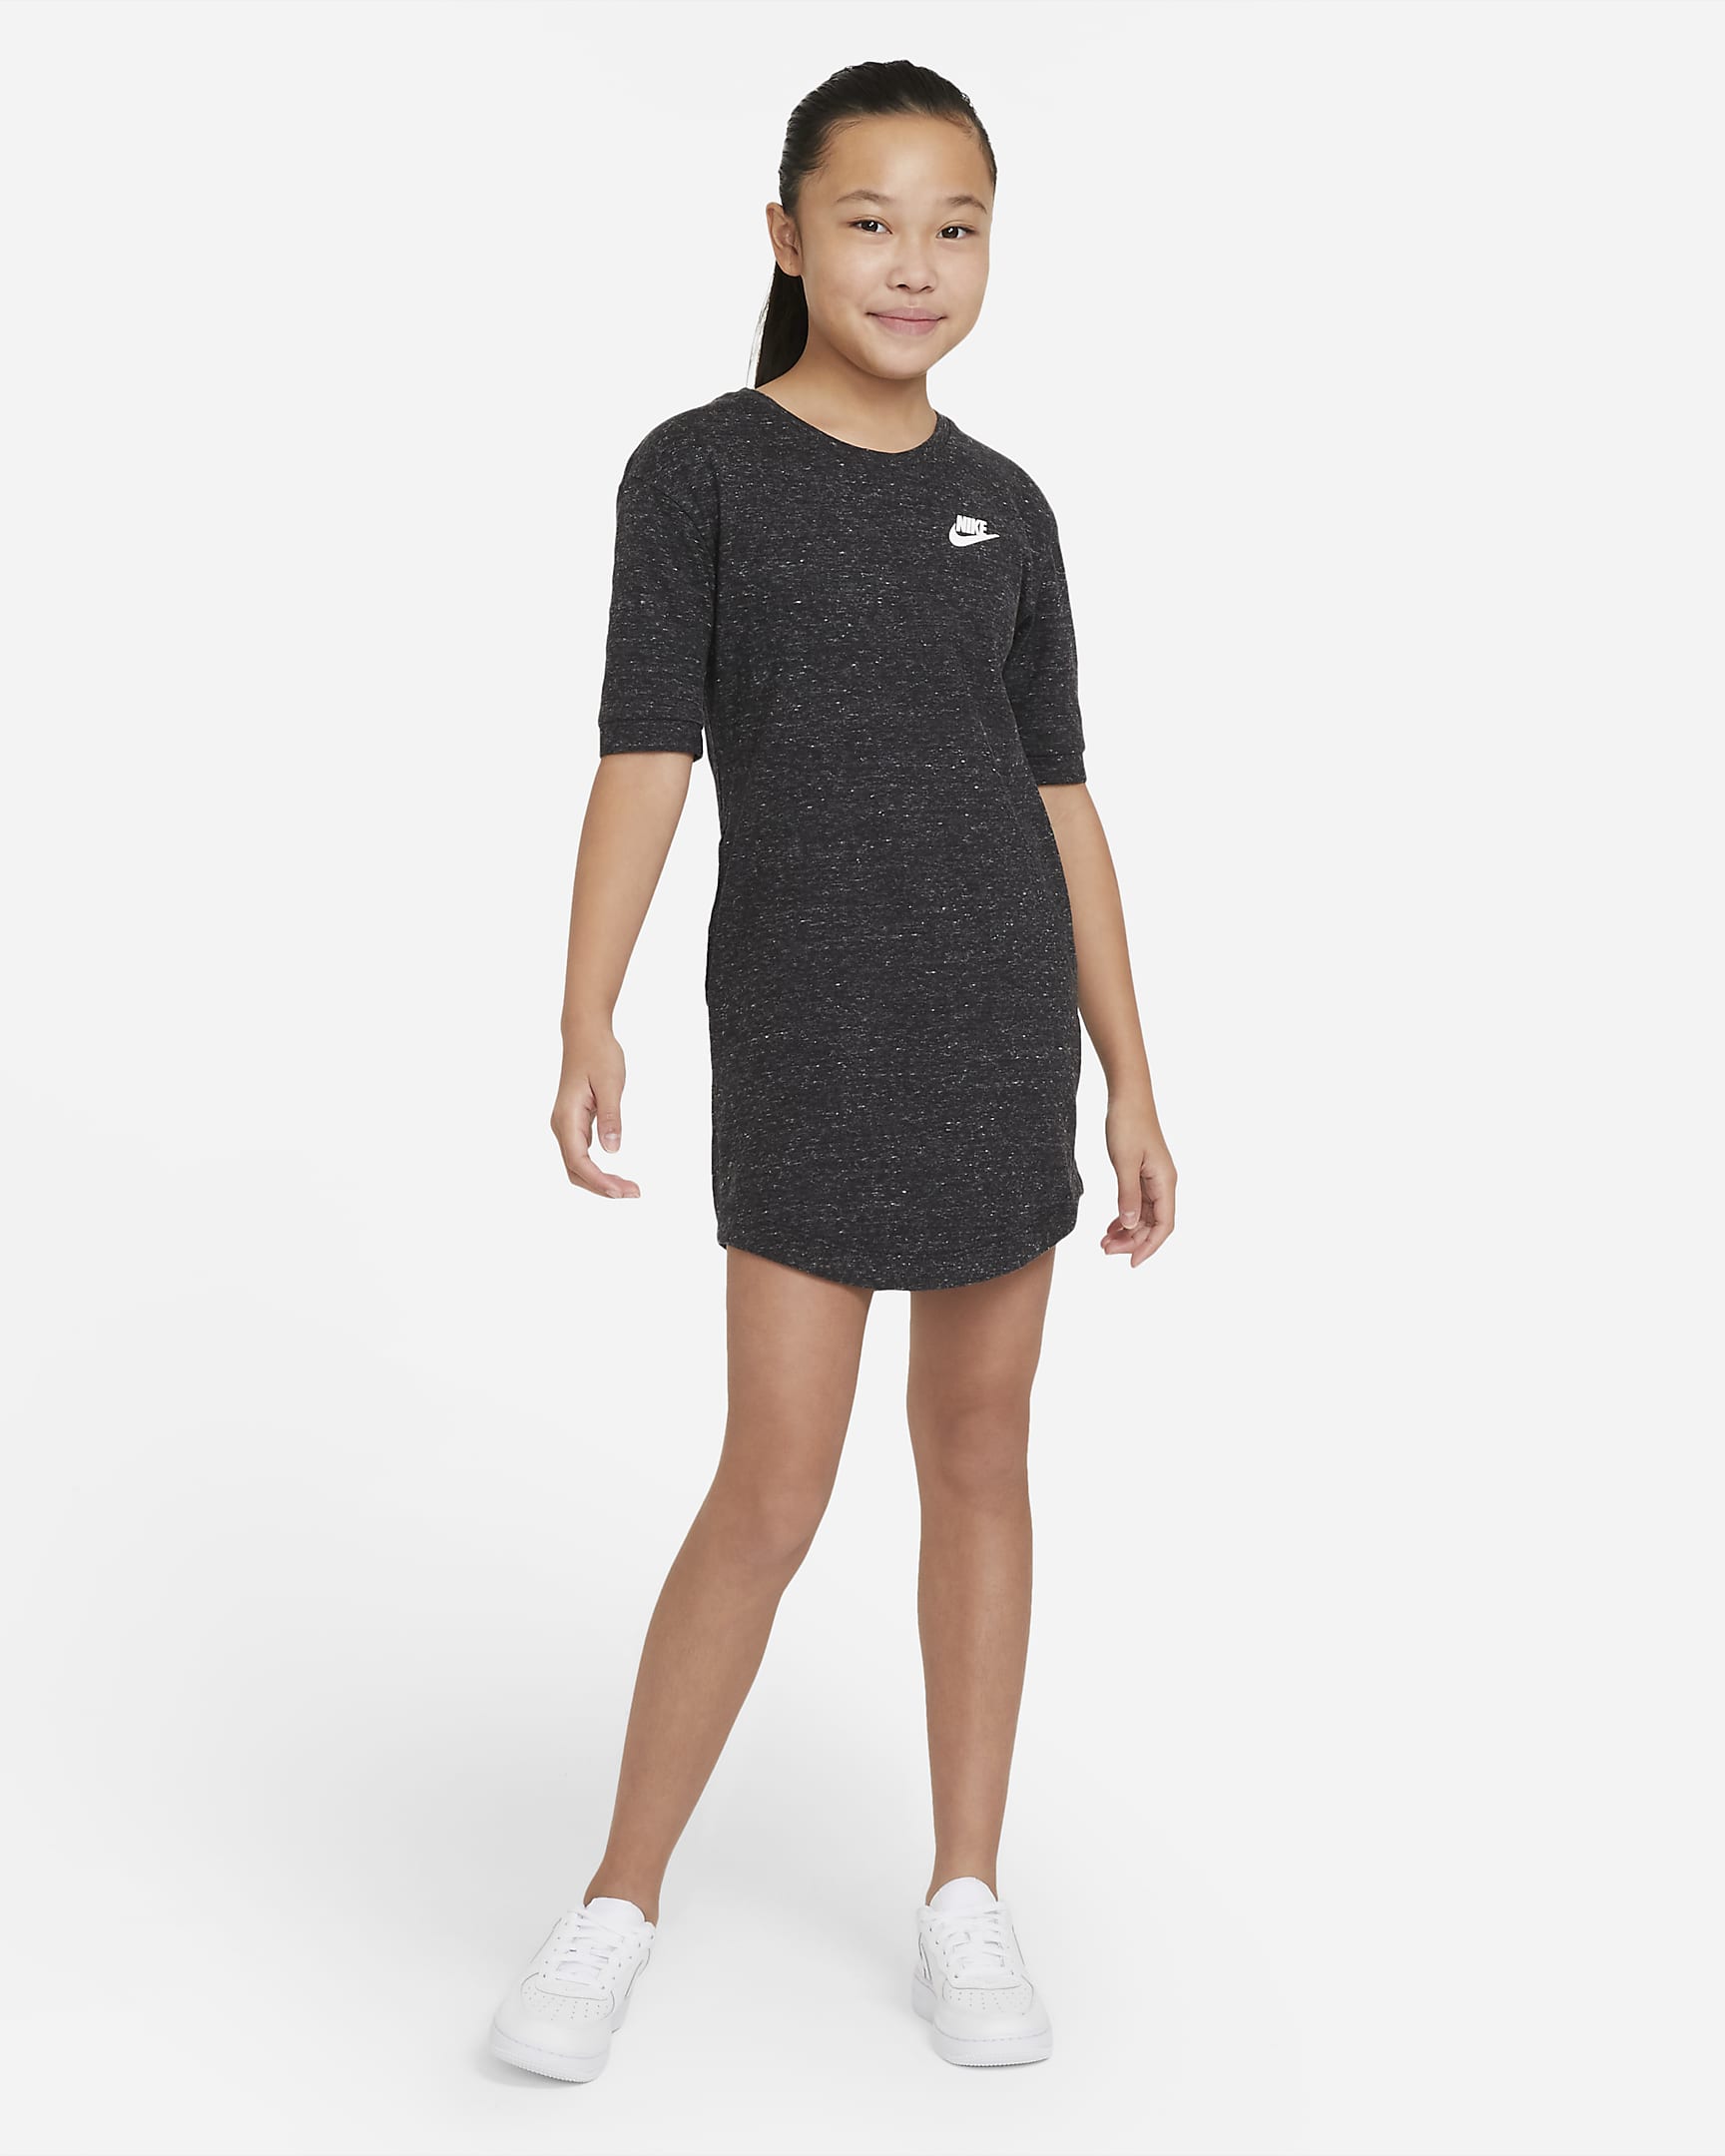 Nike Sportswear Big Kids' (Girls') Jersey Dress. Nike.com